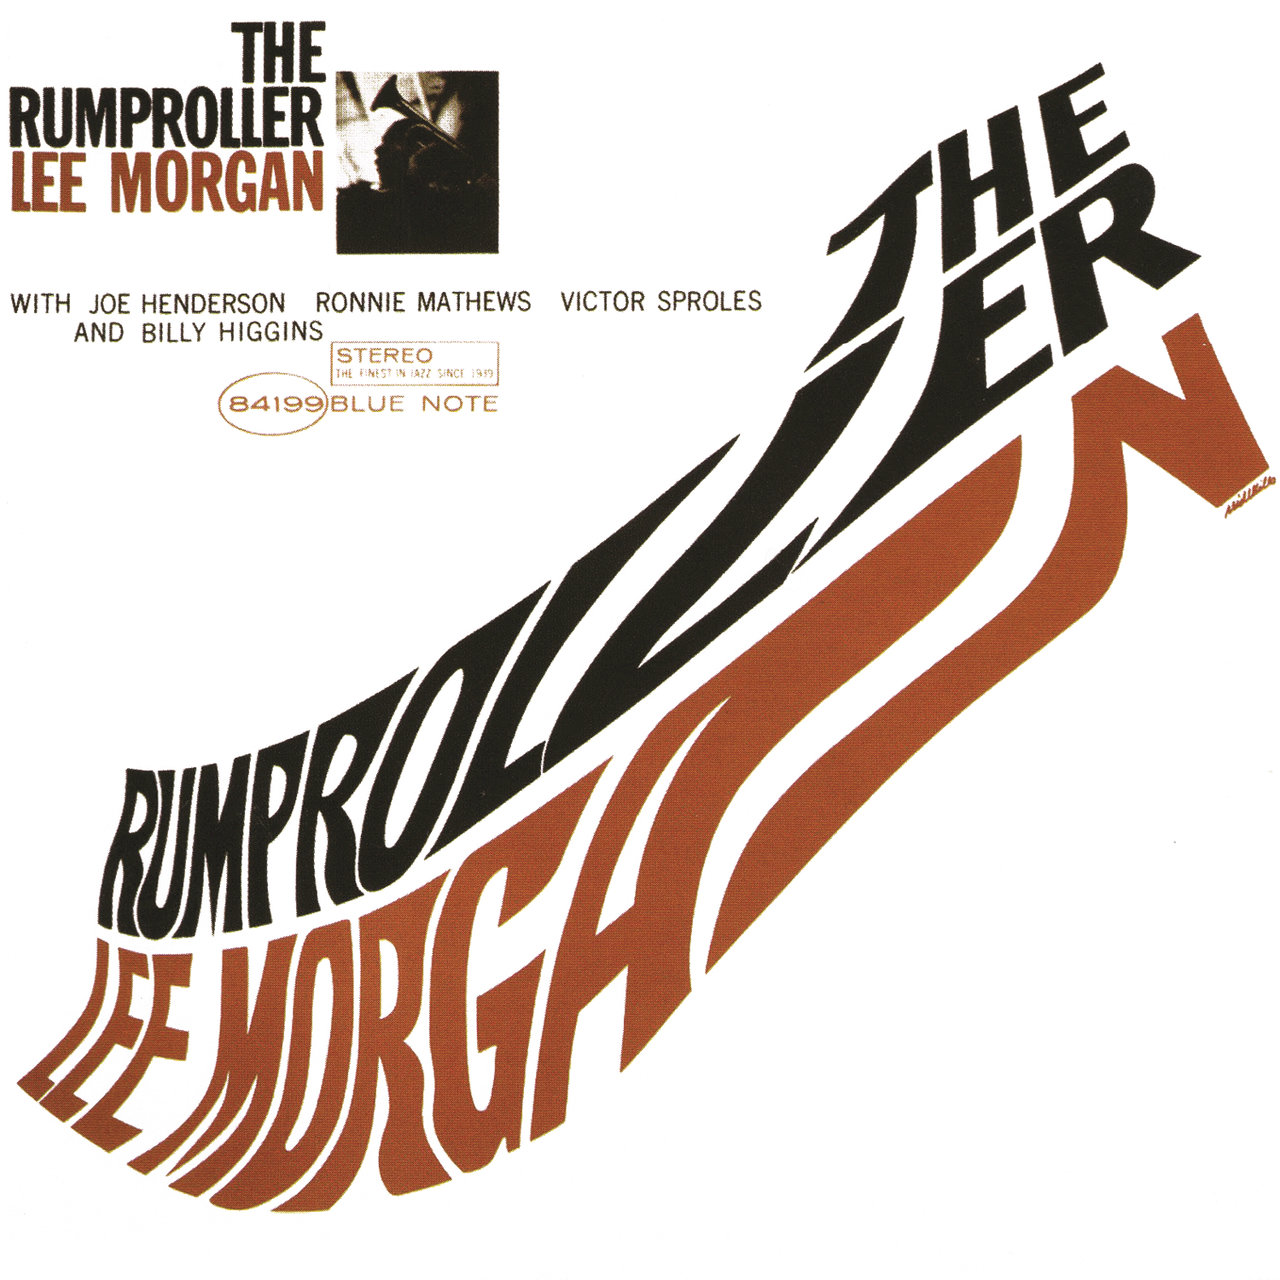 The Rumproller [1965]